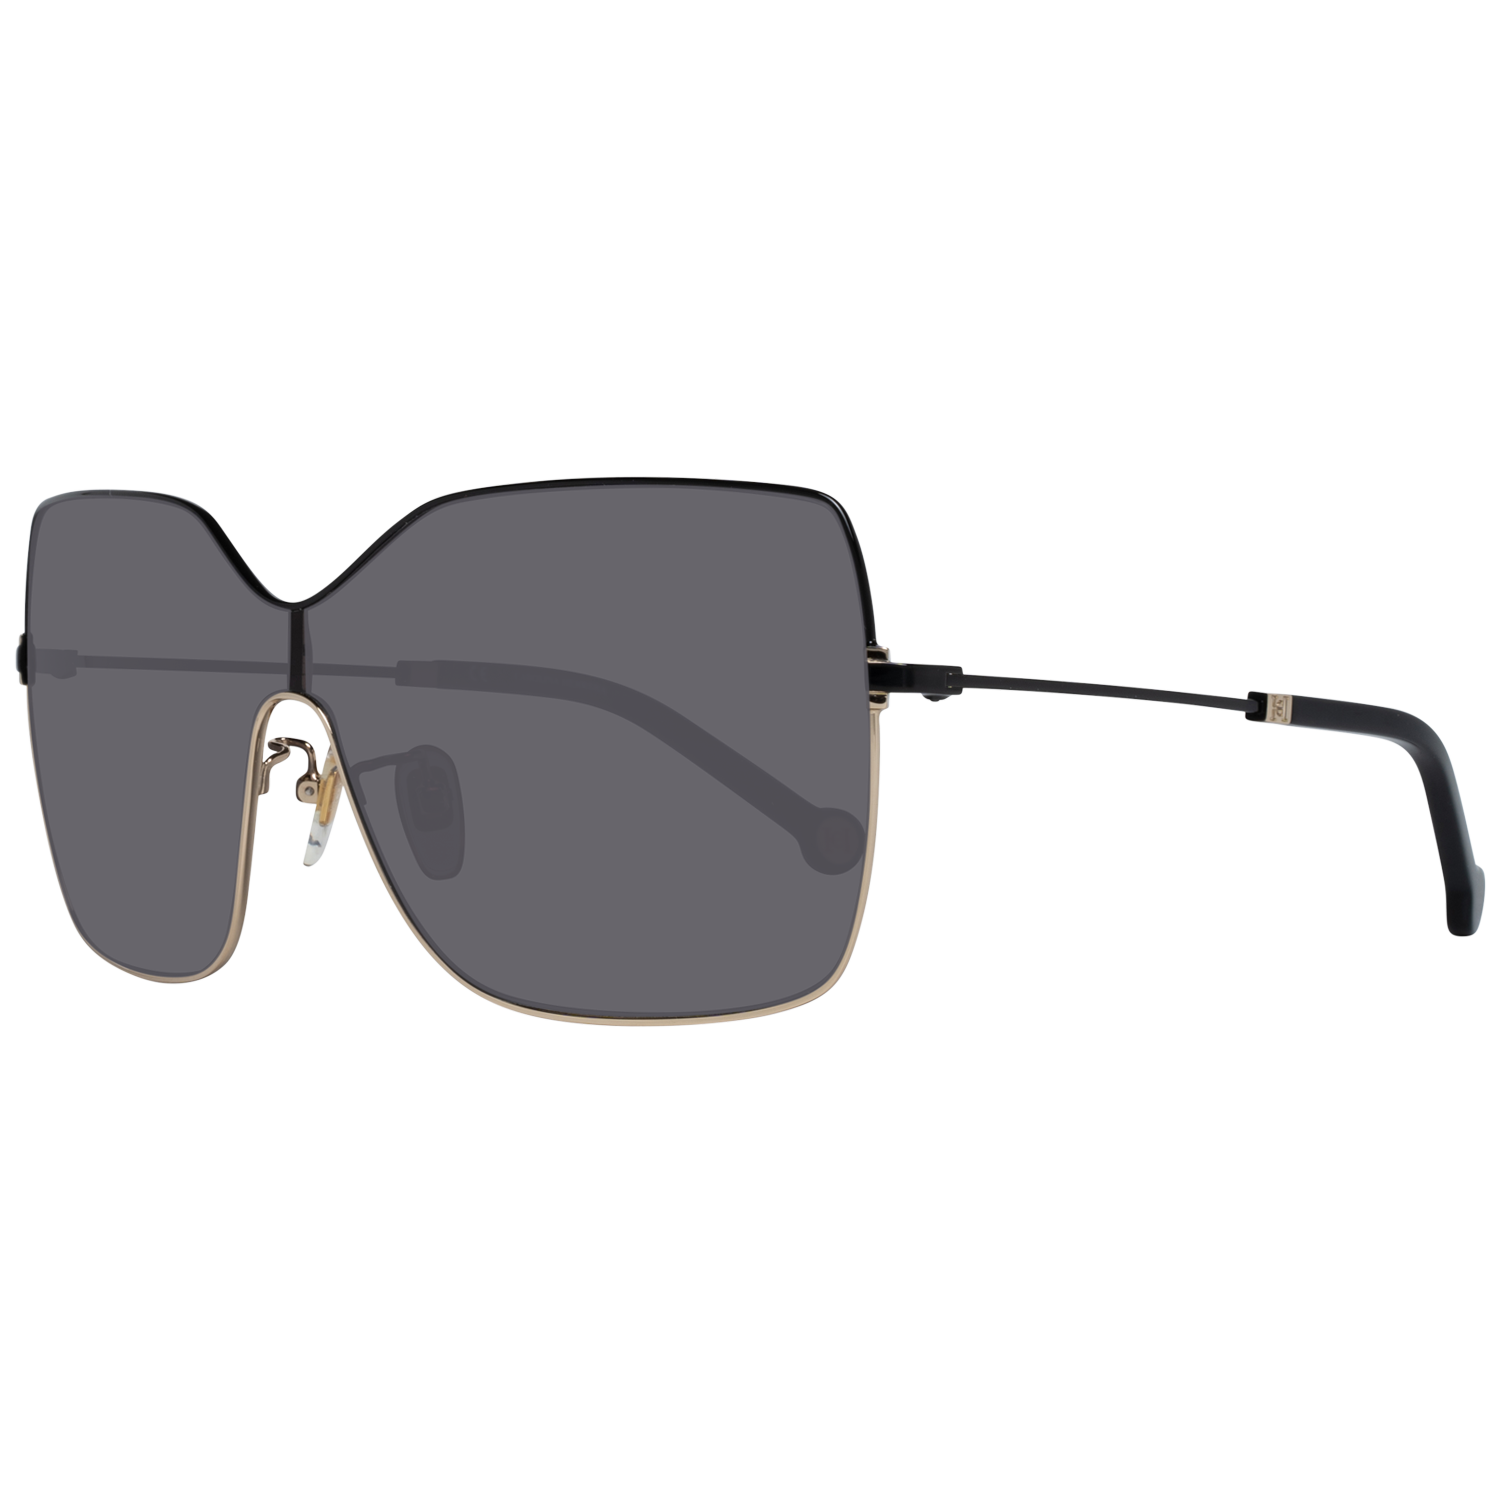 Carolina Herrera Sunglasses Carolina Herrera Sunglasses SHE175 301 99 Eyeglasses Eyewear UK USA Australia 